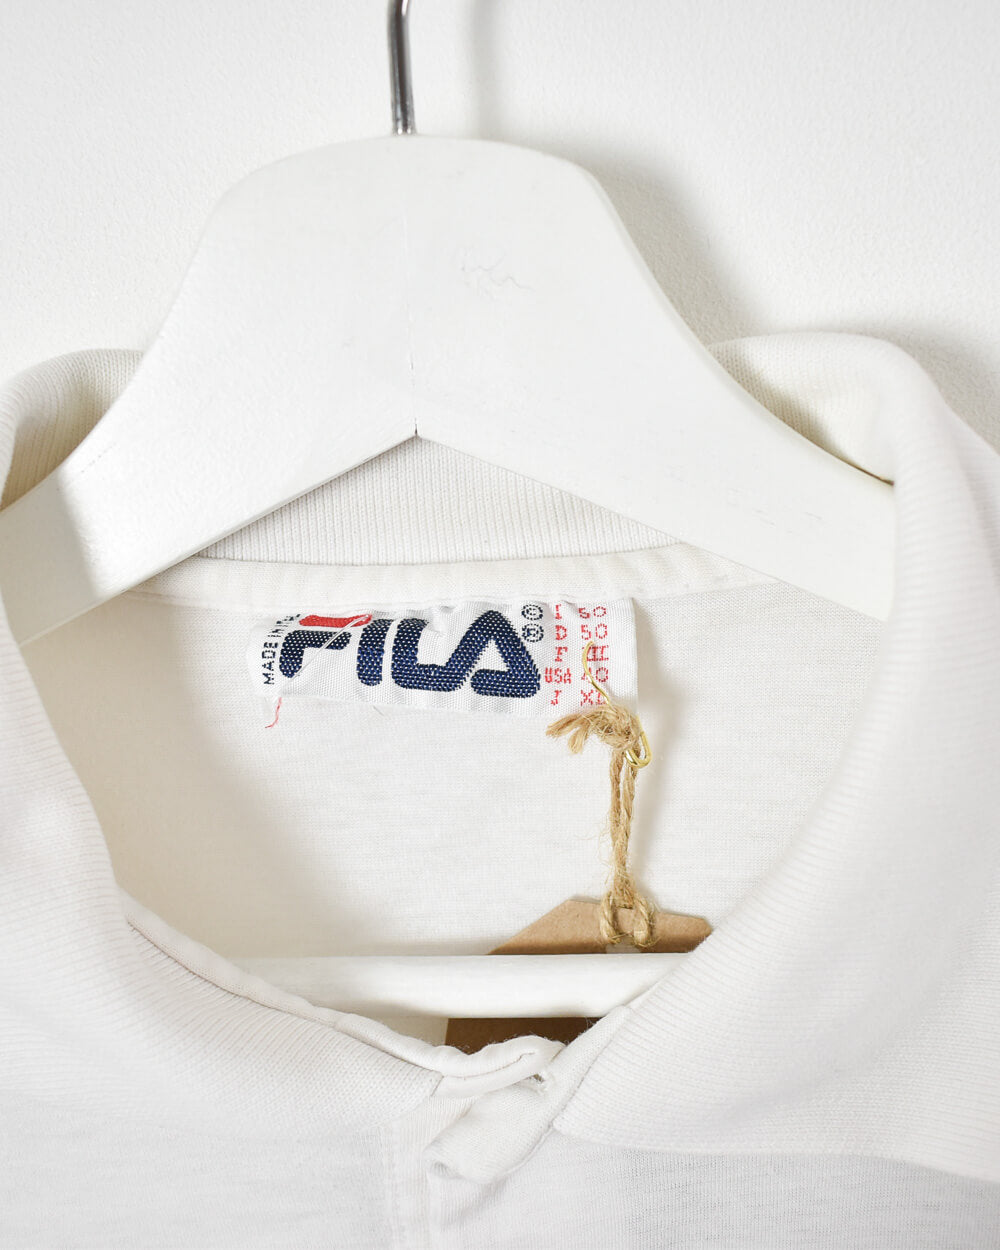 White Fila Polo Shirt - Medium